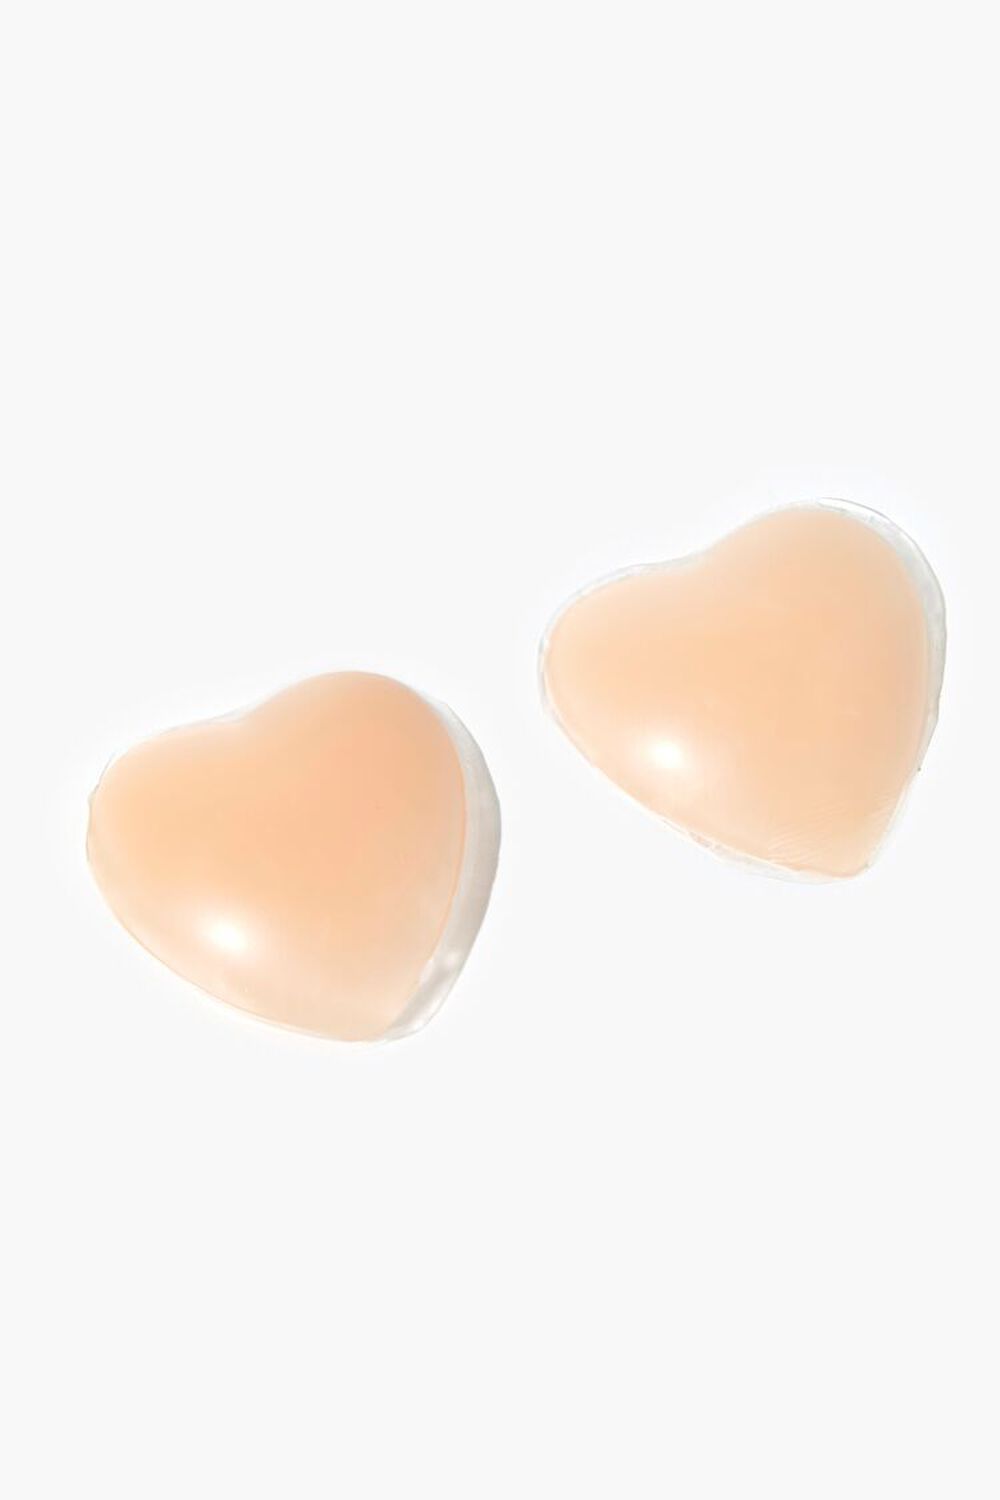 NUDE Heart-Shaped Nipple Covers, image 1